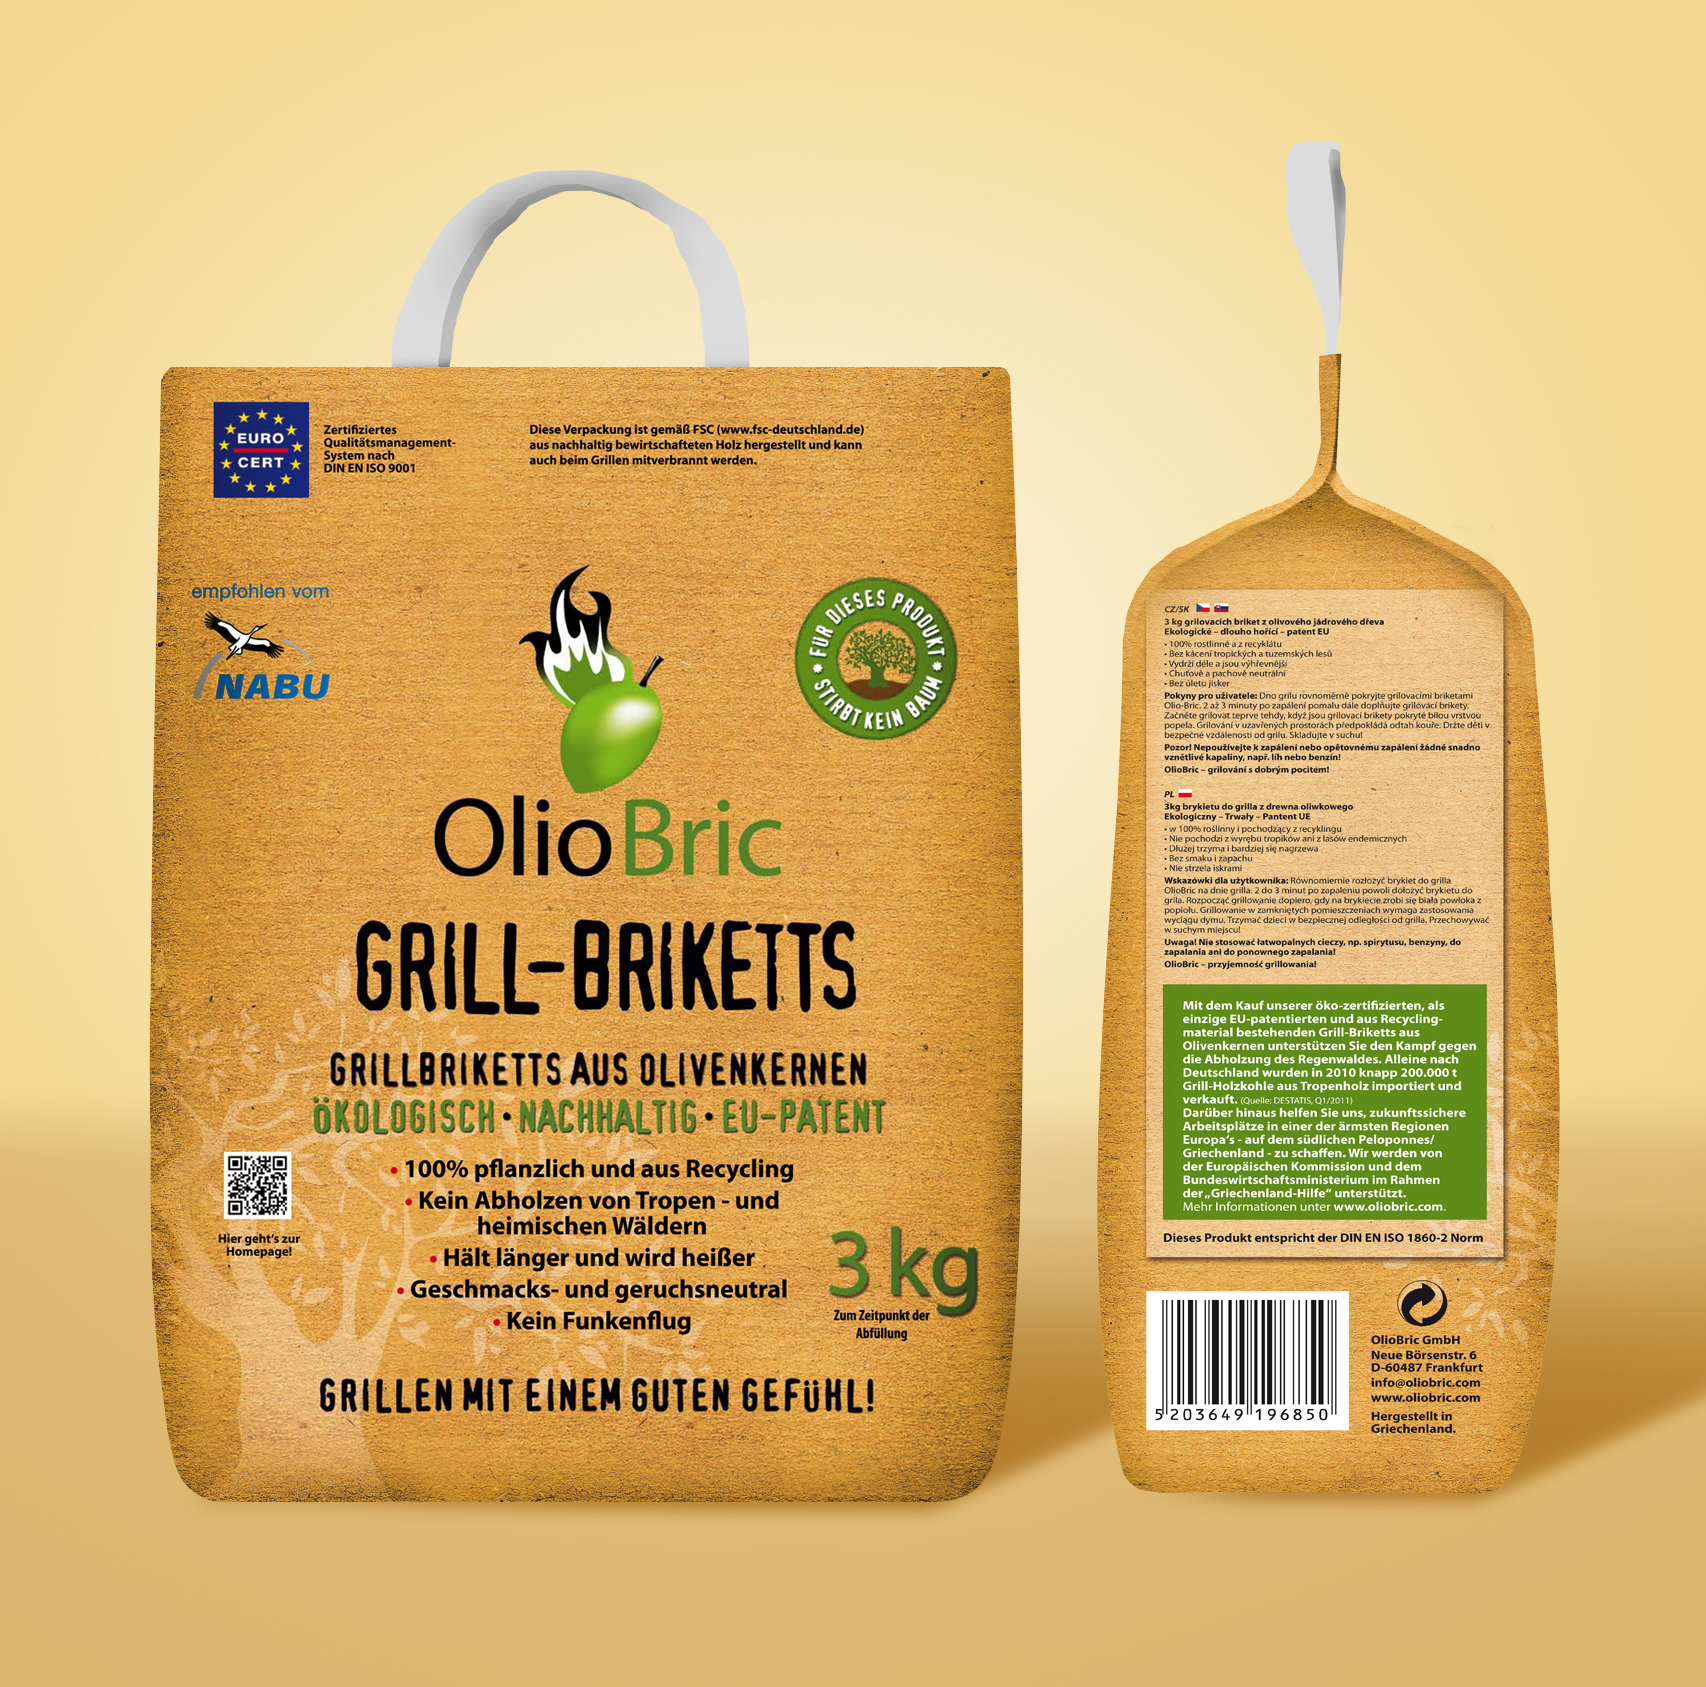 OlioBric | Grillbriketts aus Olivenresten | 3kg 